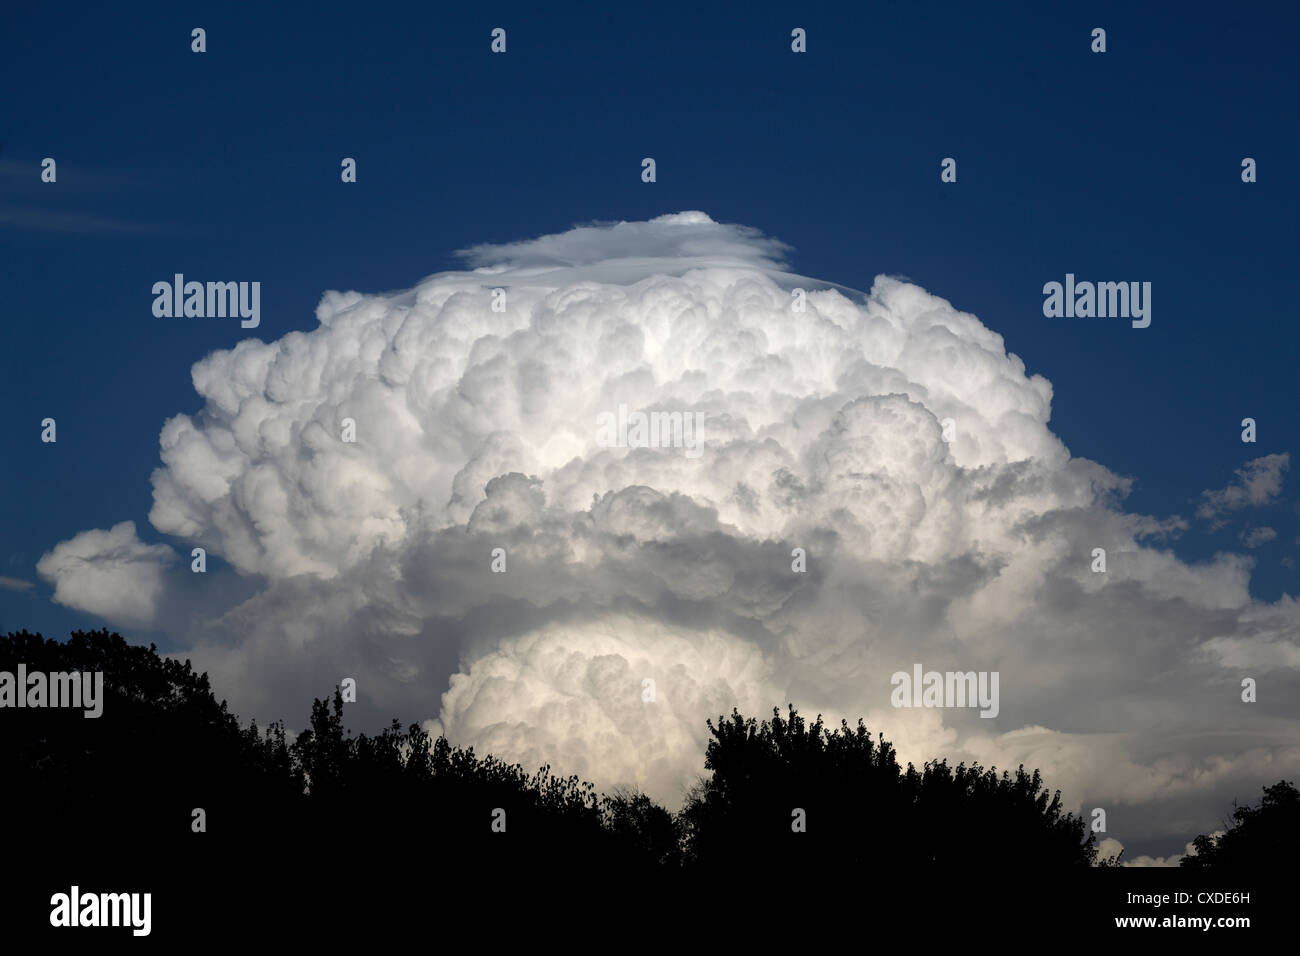 Mushroom thunderstorm cloud with distinct pileus layering on top. Stock Photo